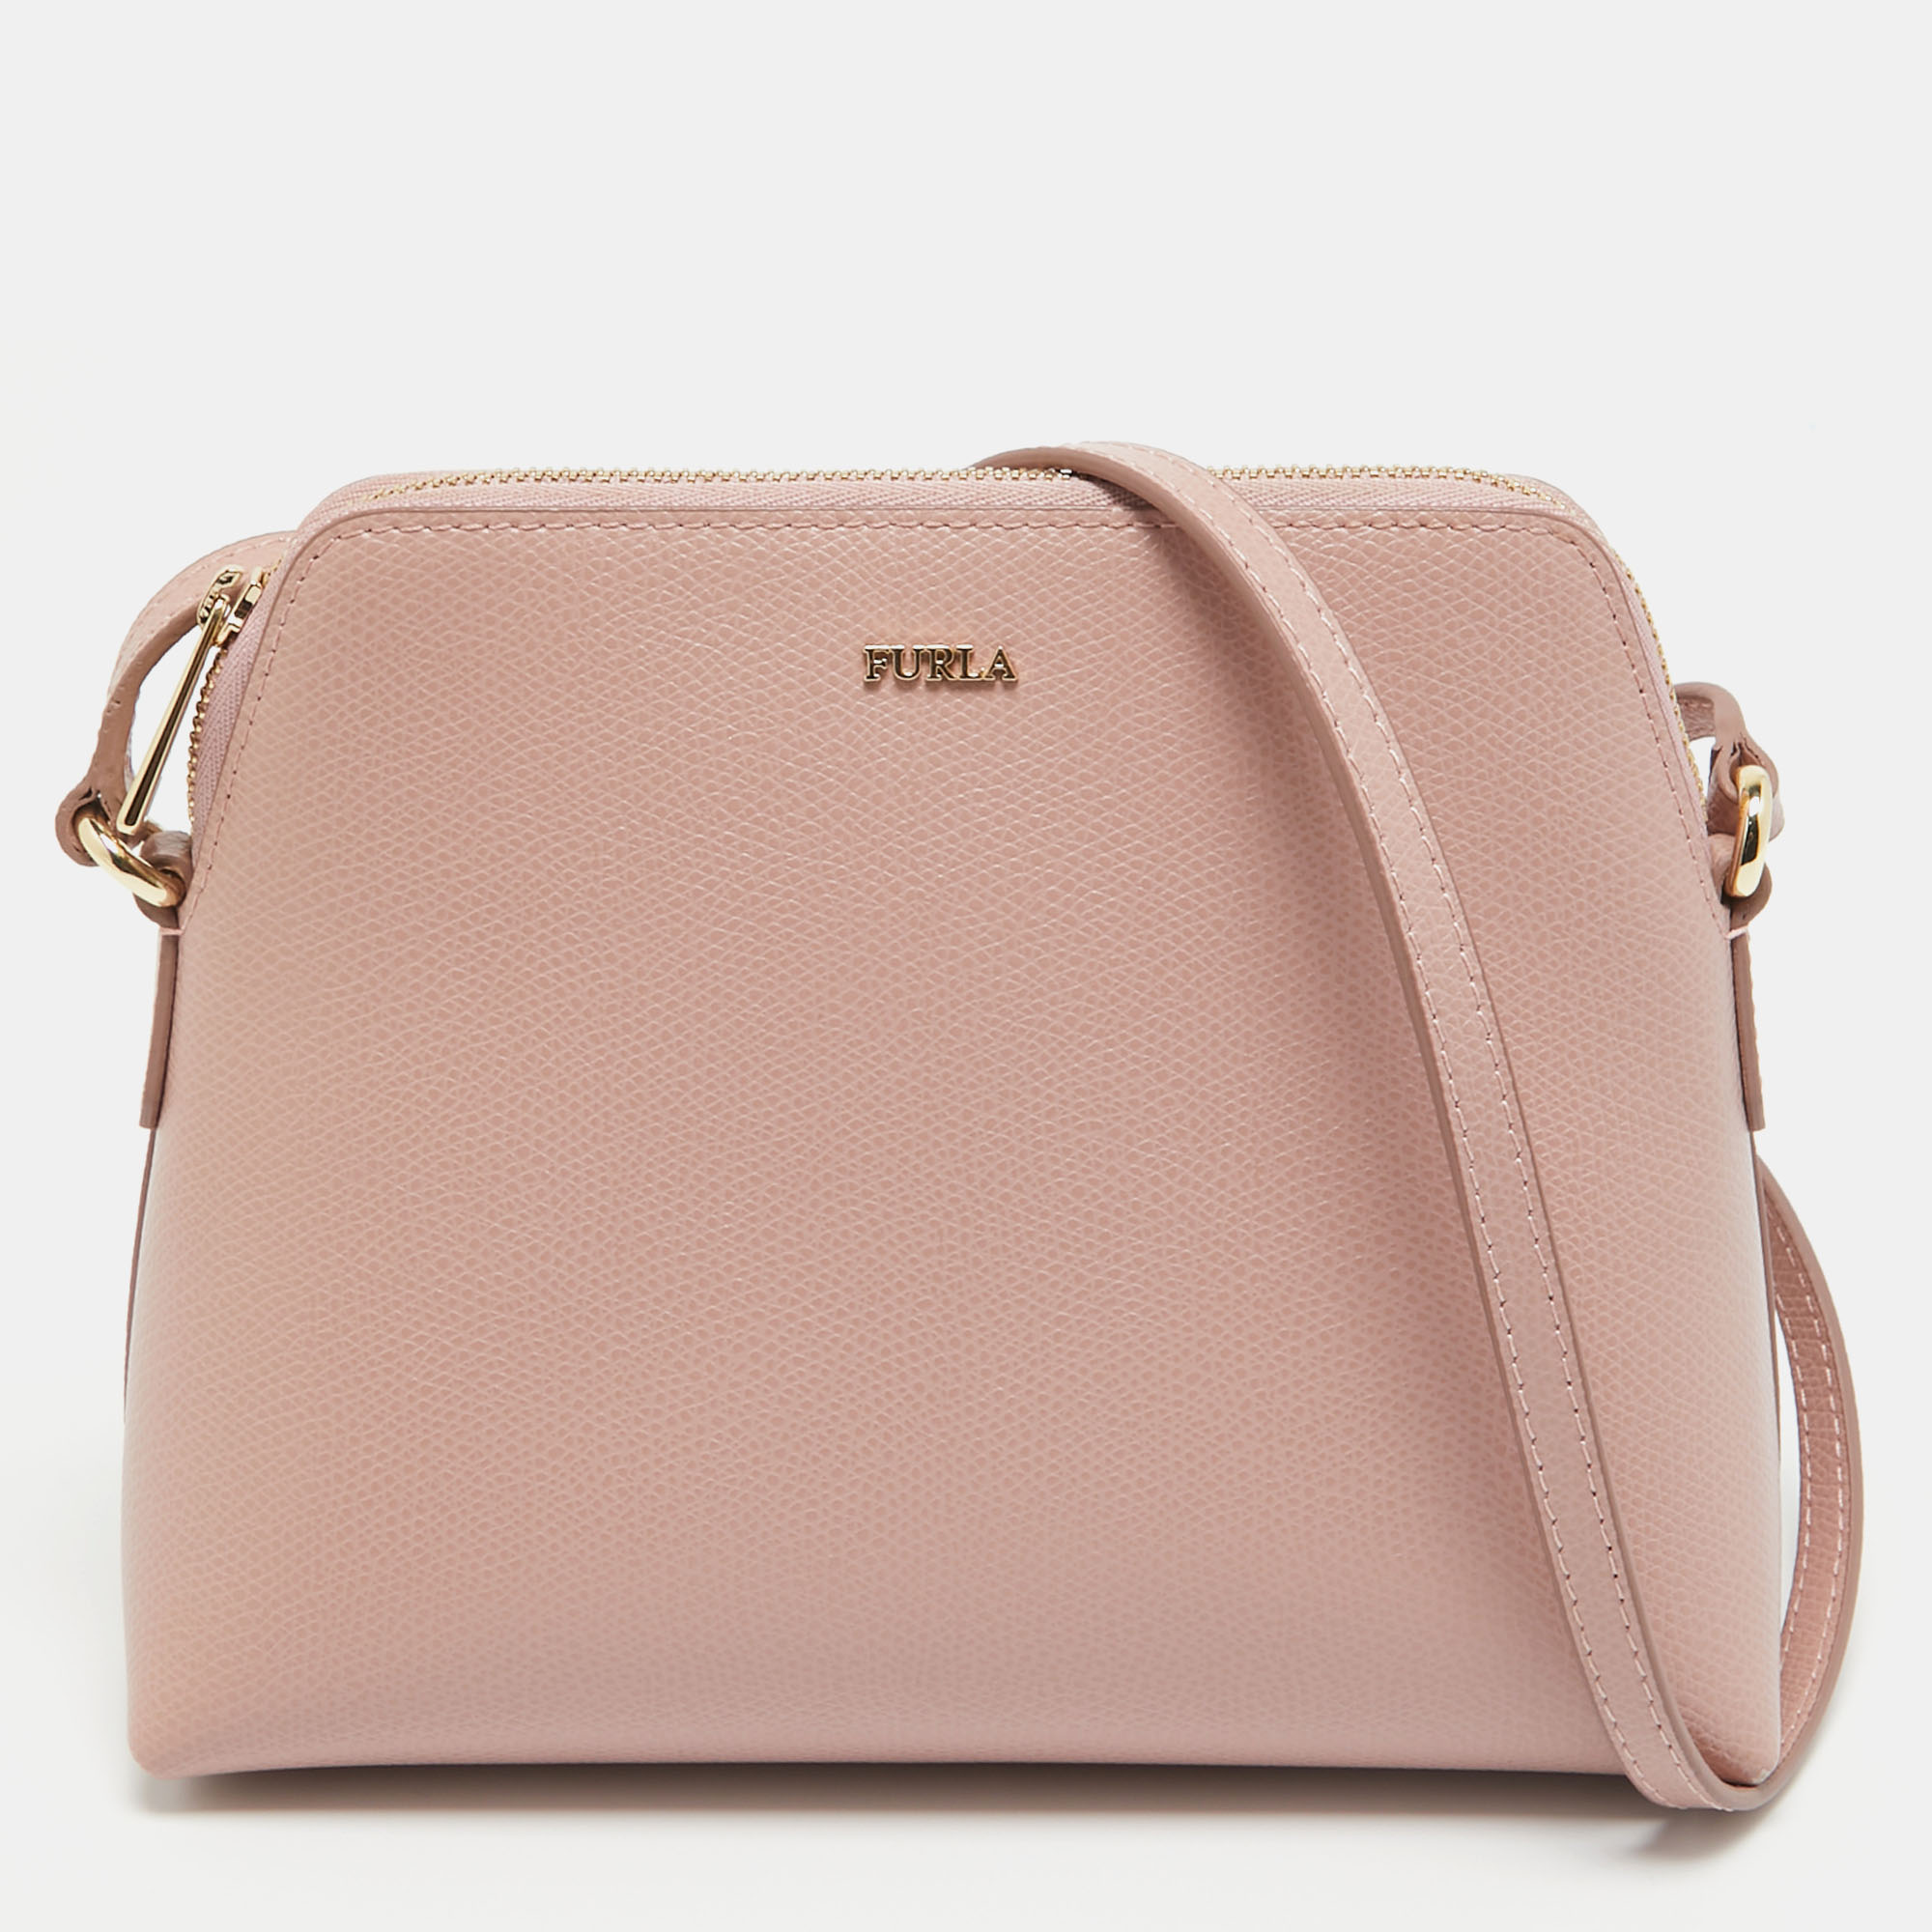 Furla pink leather boheme crossbody bag